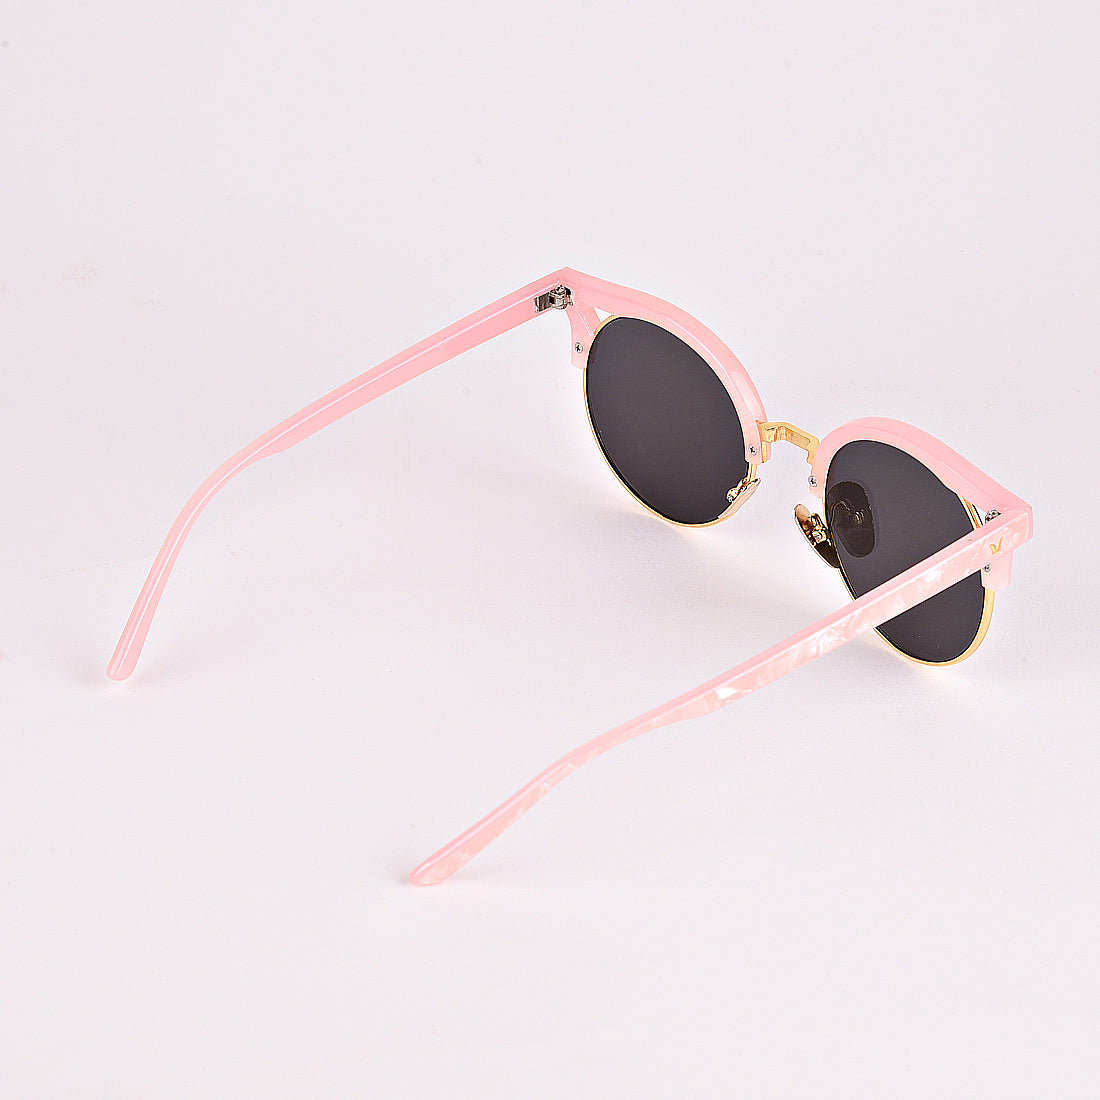 Pento Fancy Mercury Marble Sunglasses For Females